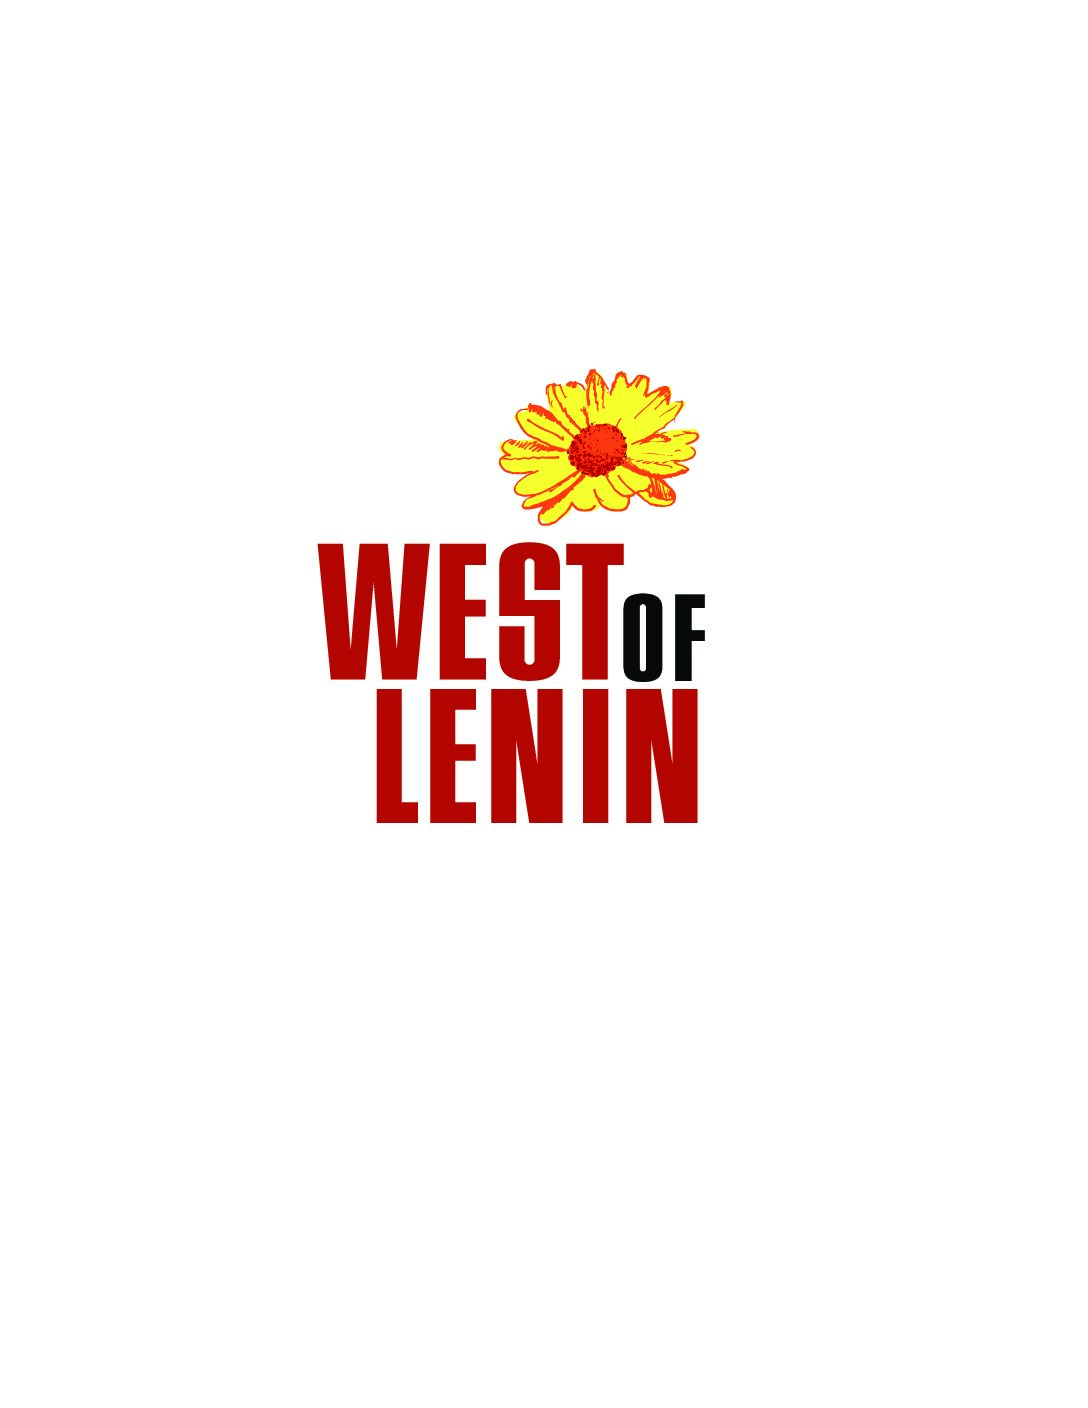 West of Lenin / The Ethereal Mutt, Ltd.